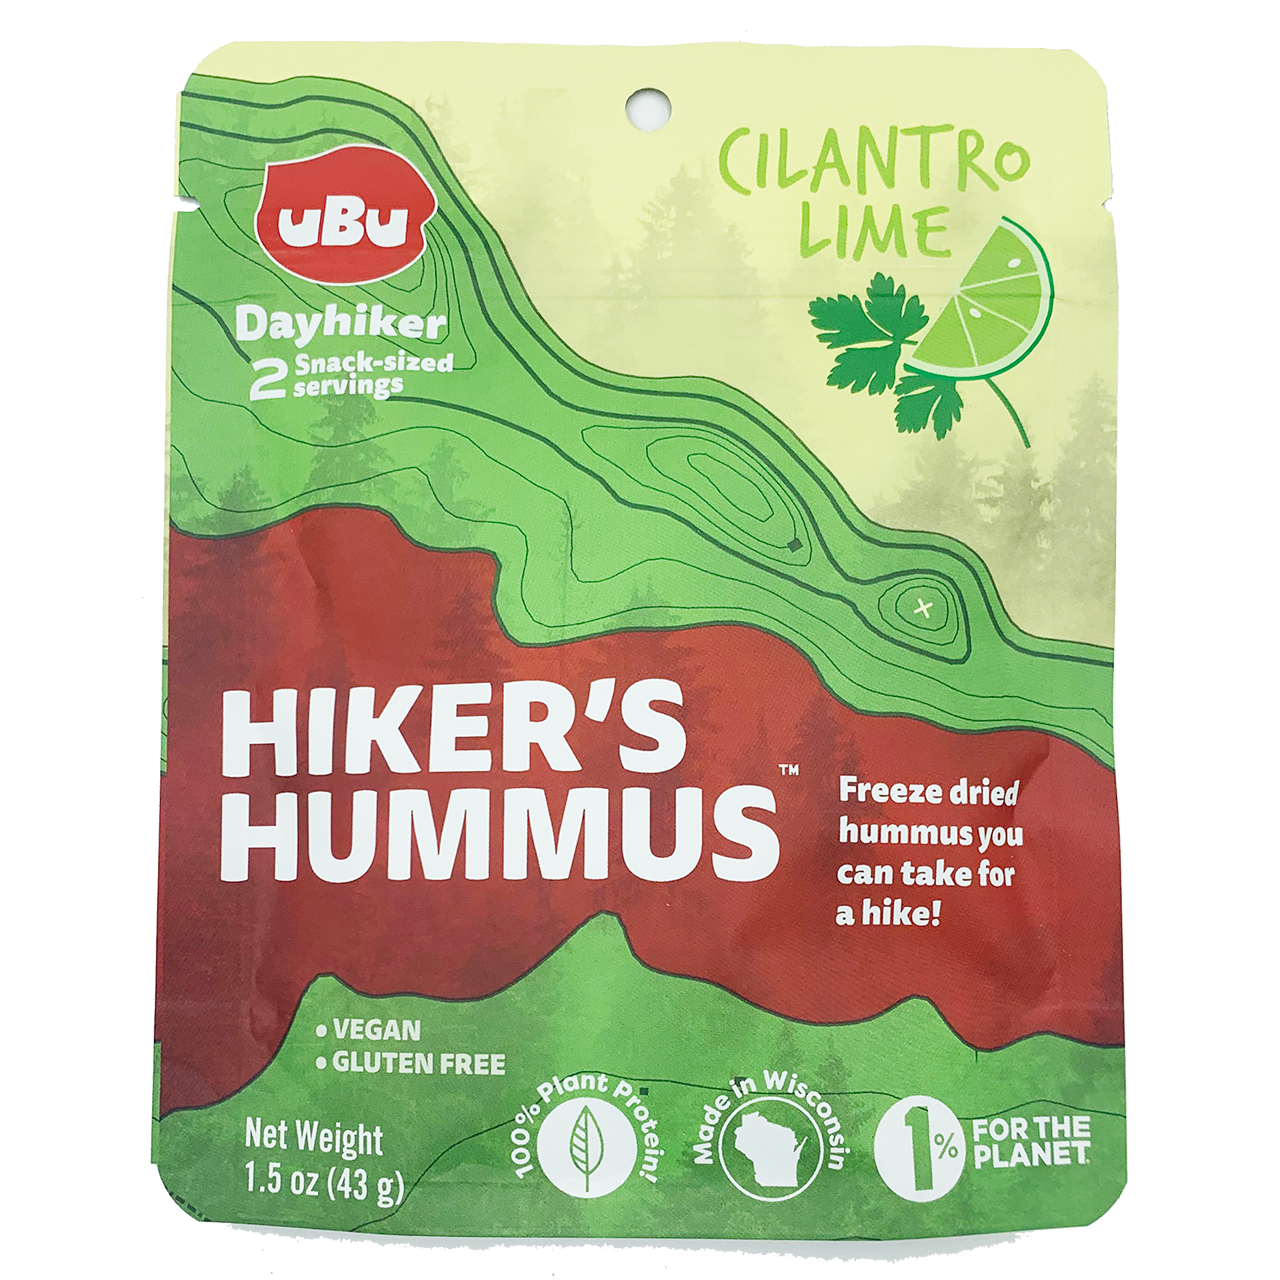 Cilantro Lime Hiker Hummus